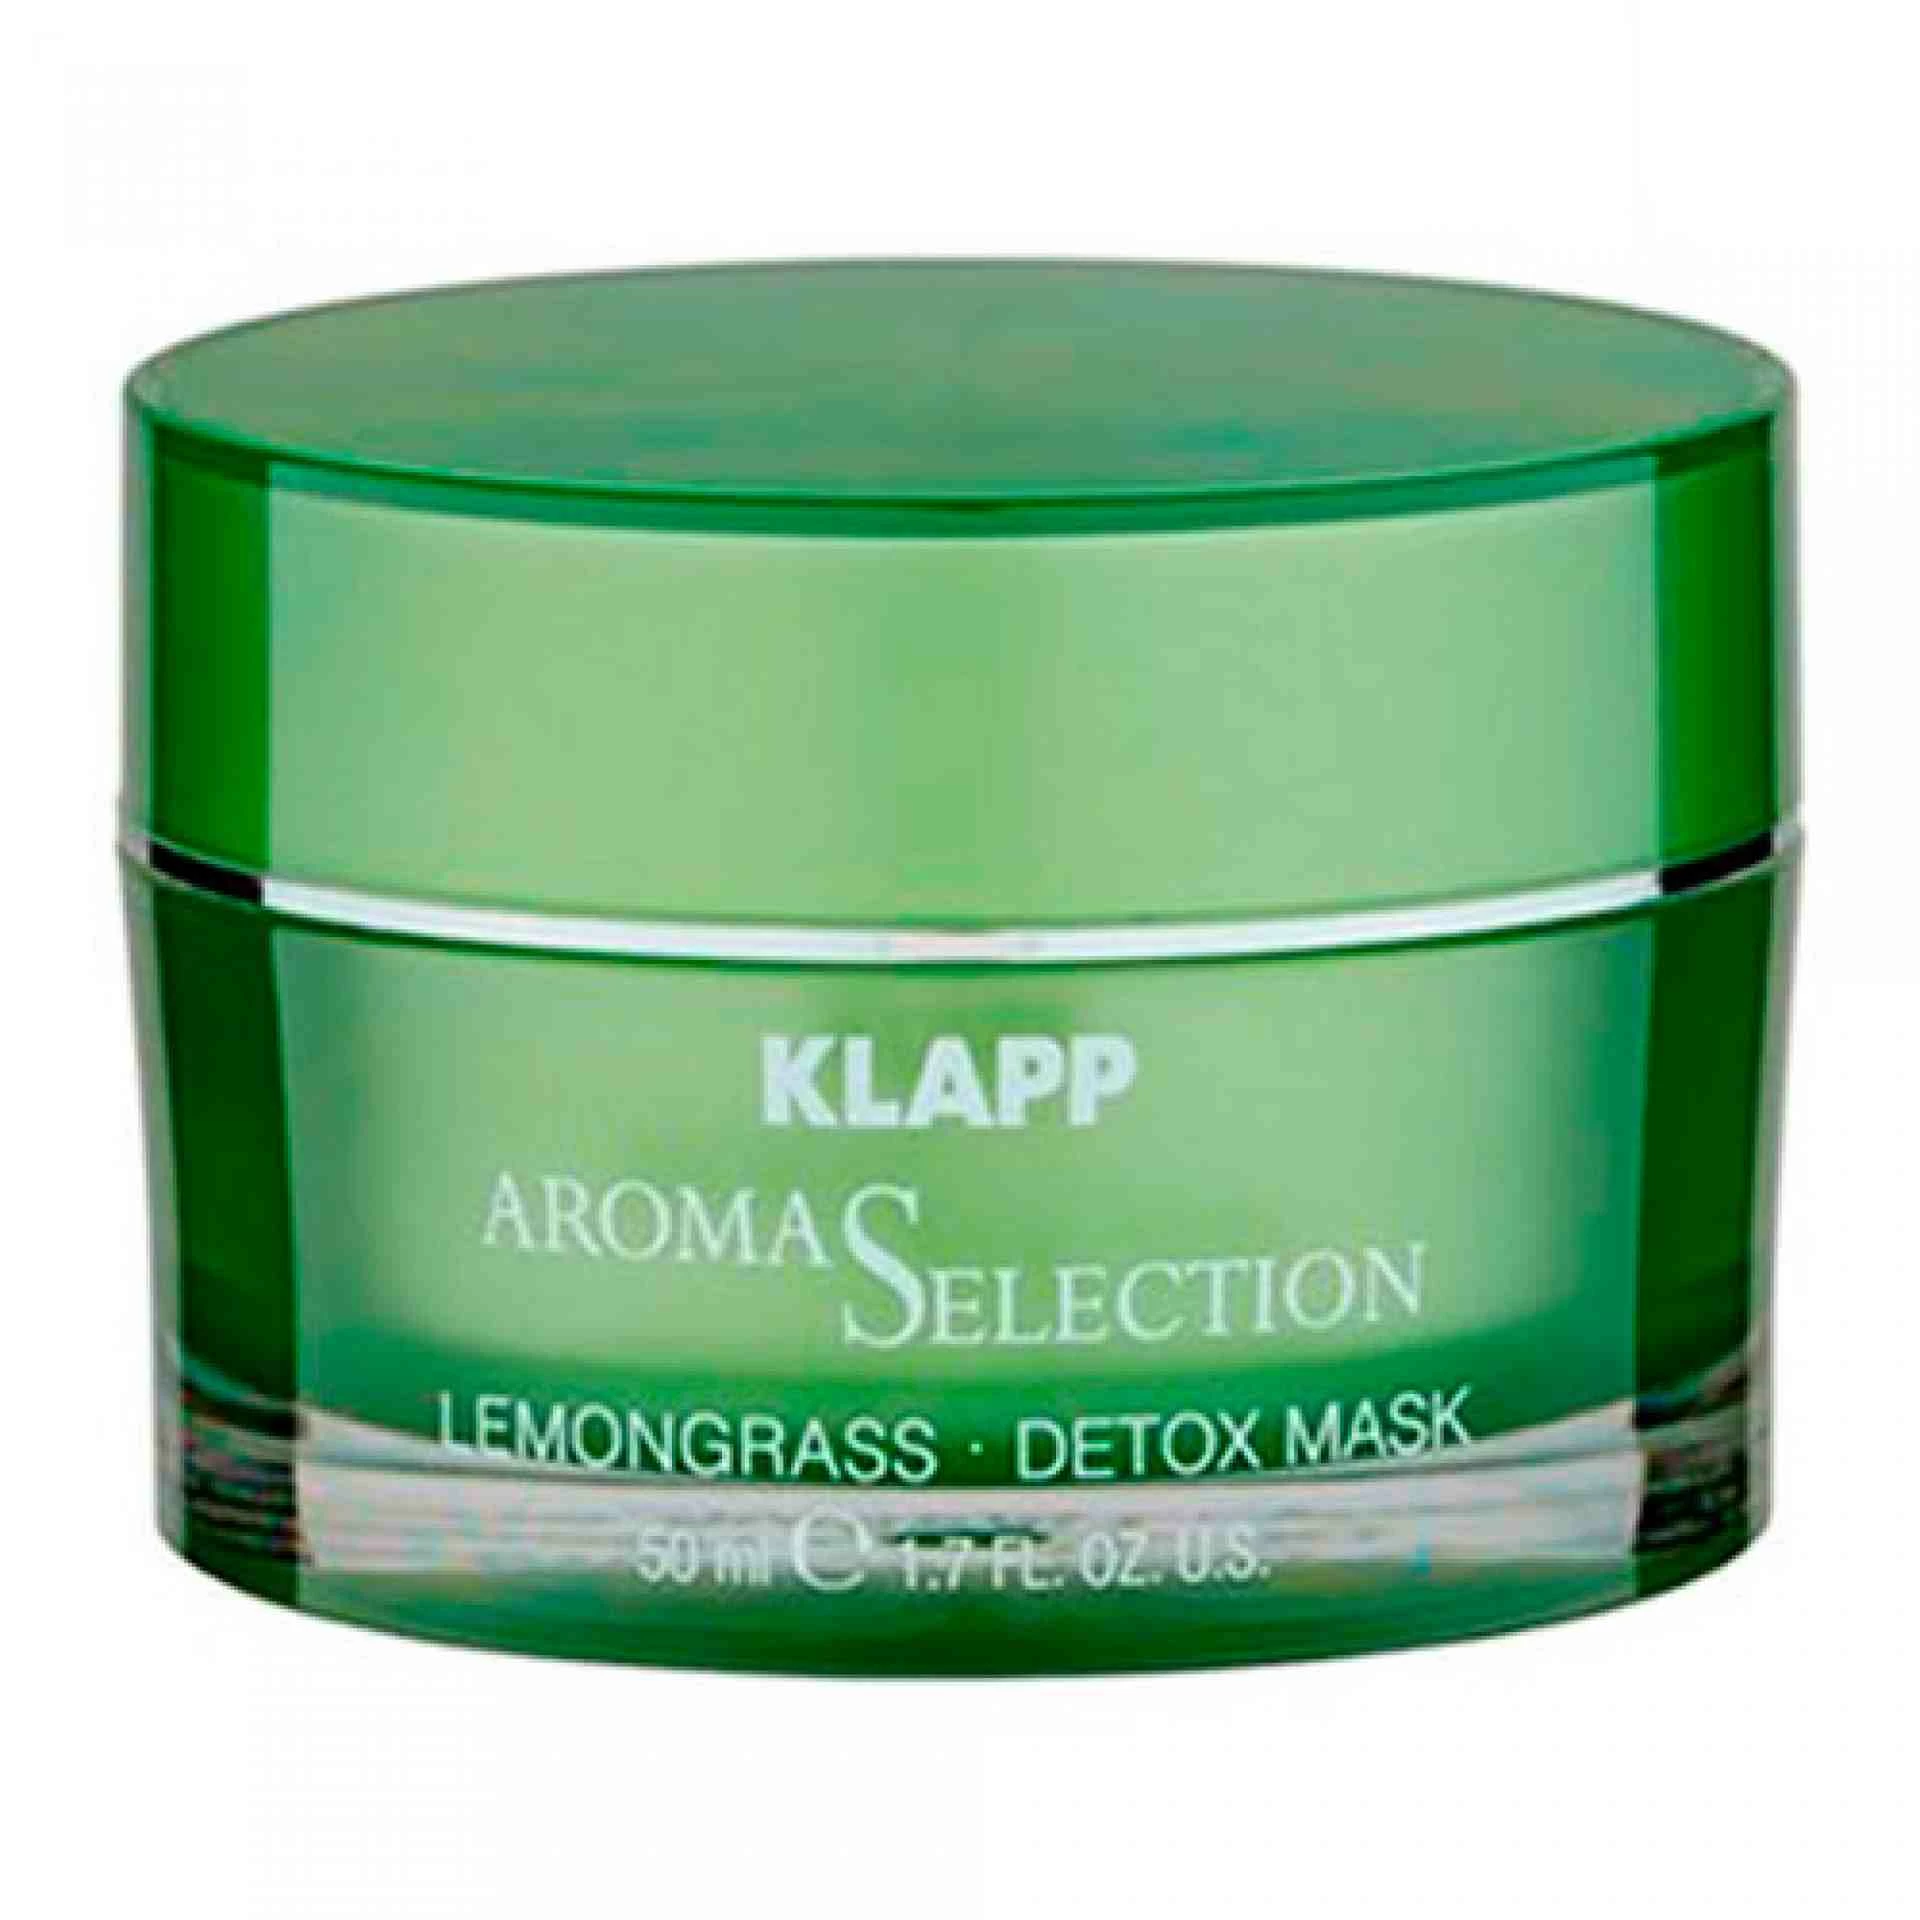 Aroma Selection Lemongrass Detox Mask 50ml Klapp®